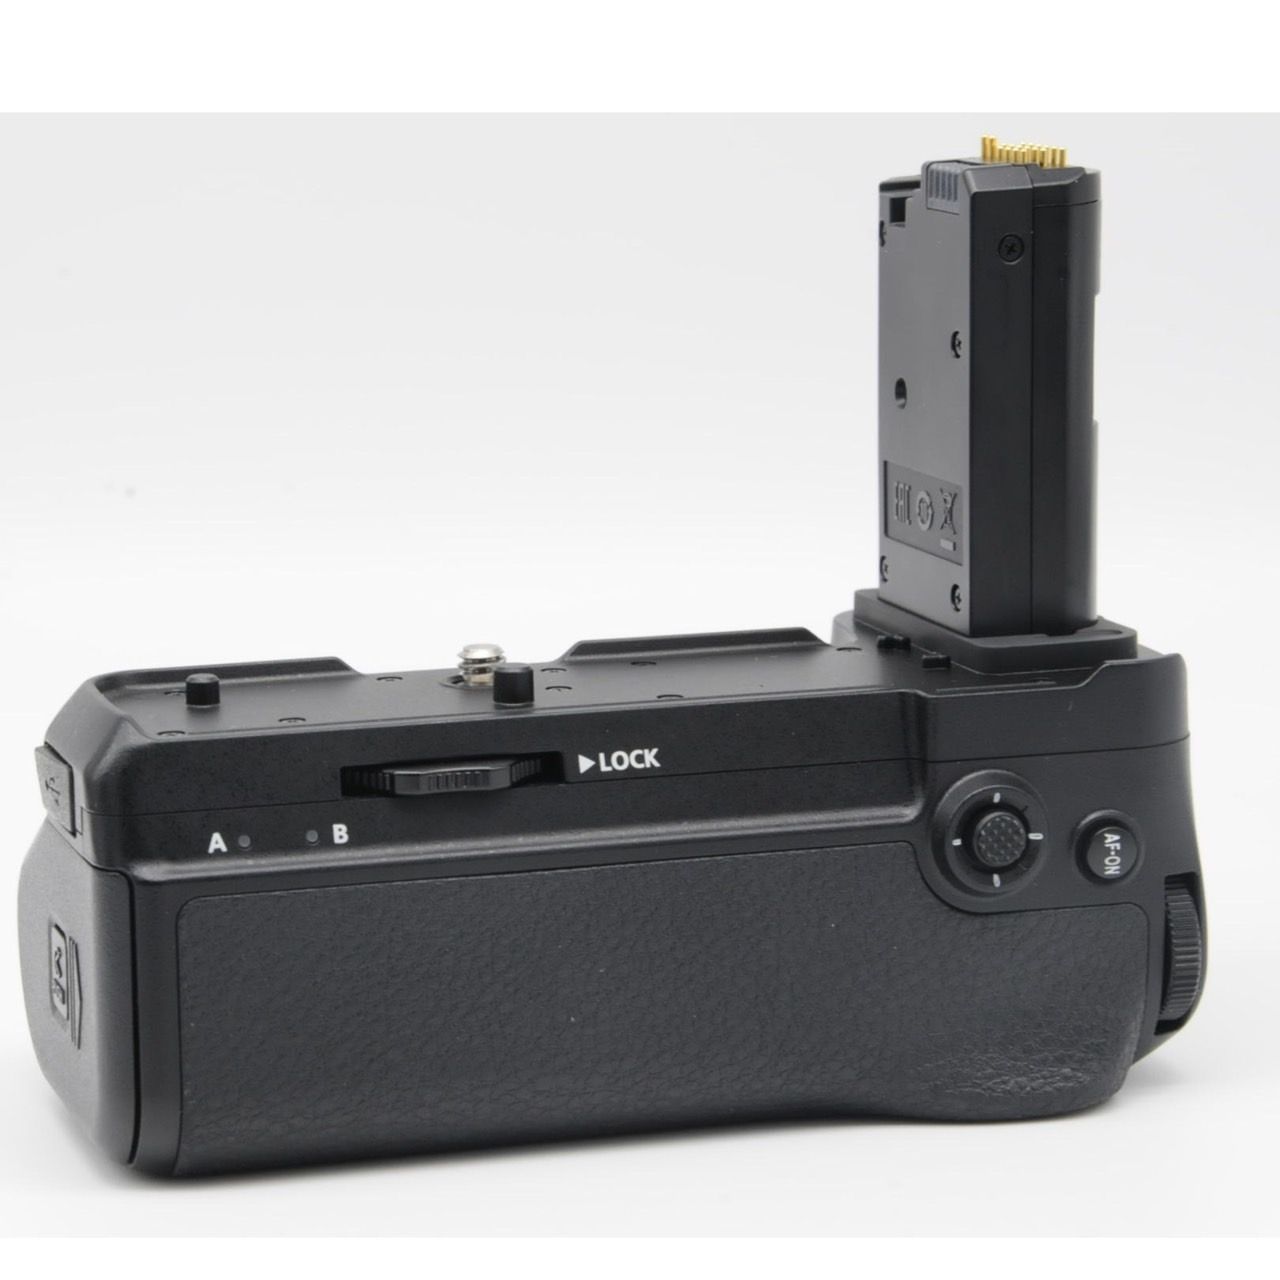 Nikon マルチパワーバッテリーパック MB-N11 - メルカリ